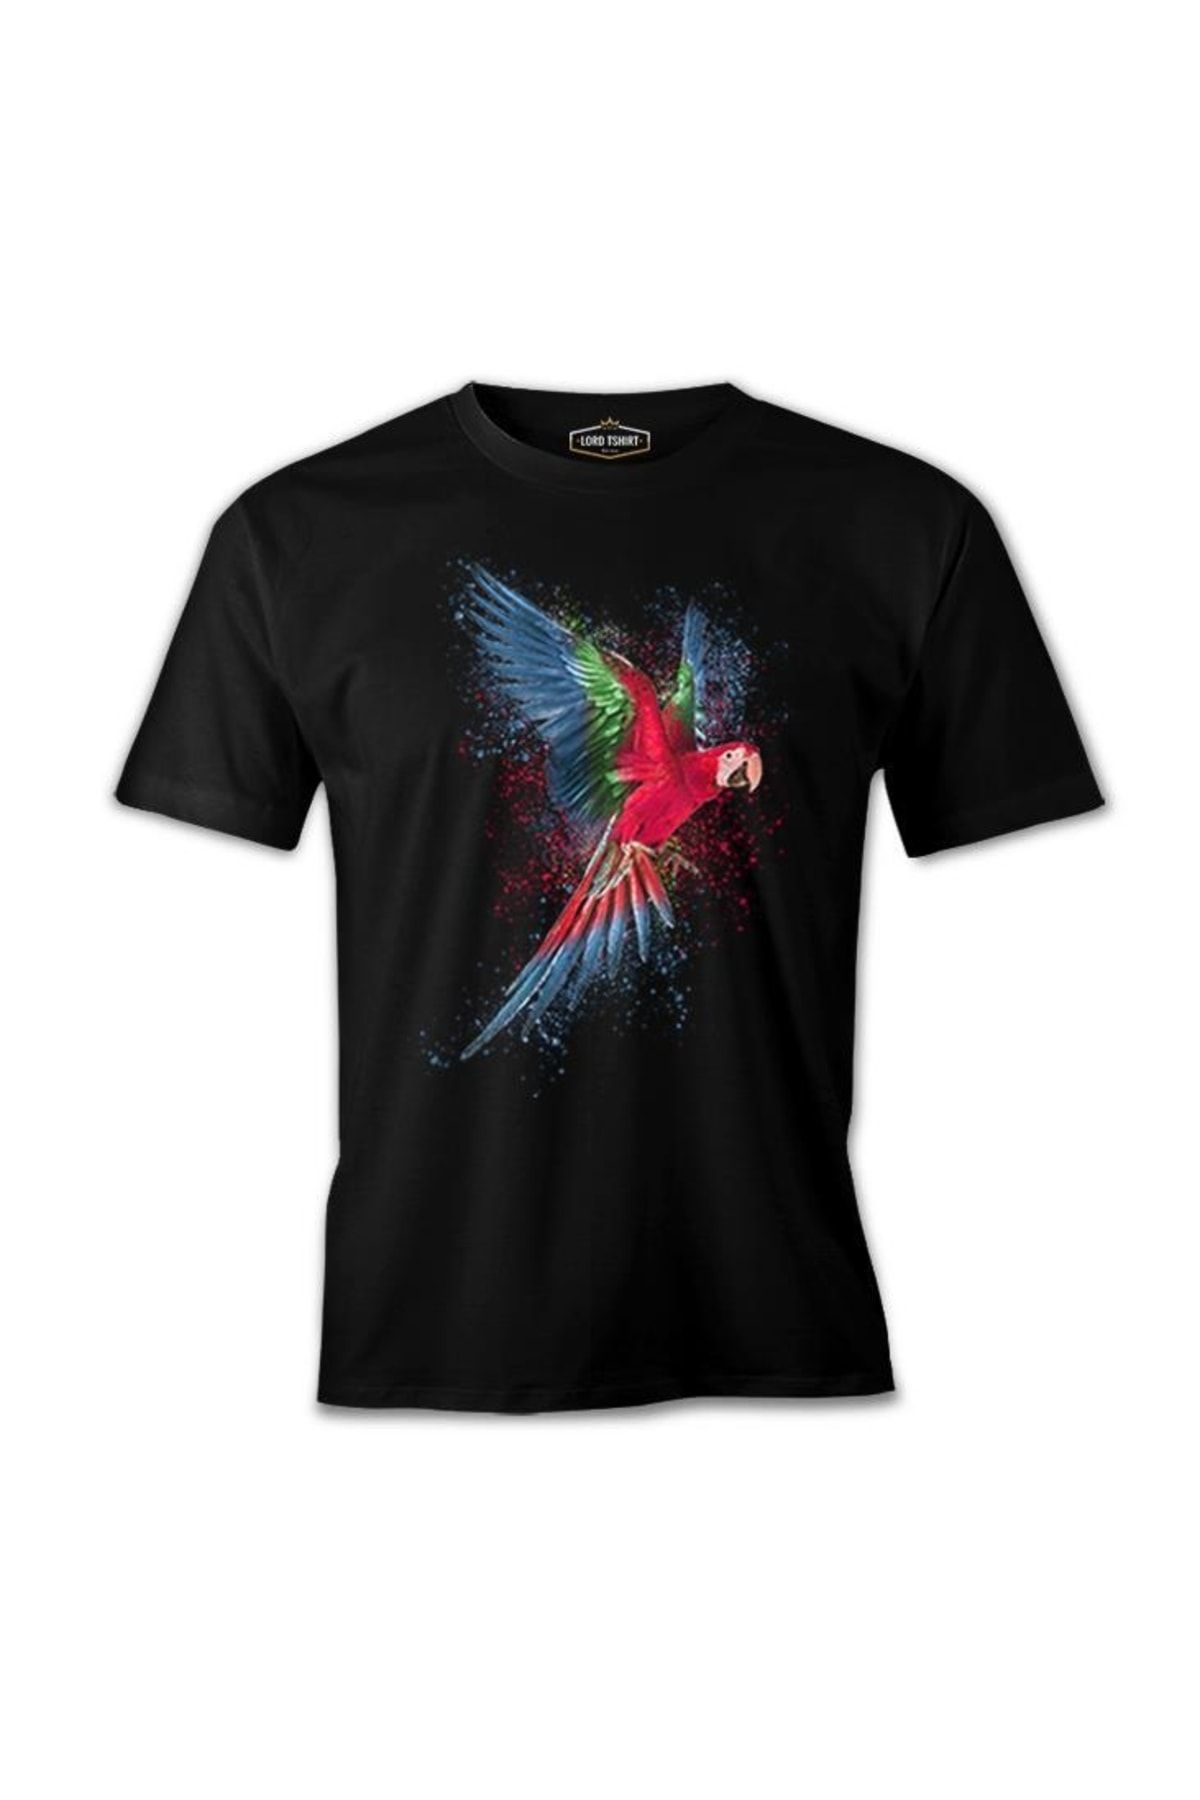 Lord T-Shirt Parrot Splashing Colors Siyah Erkek Tshirt